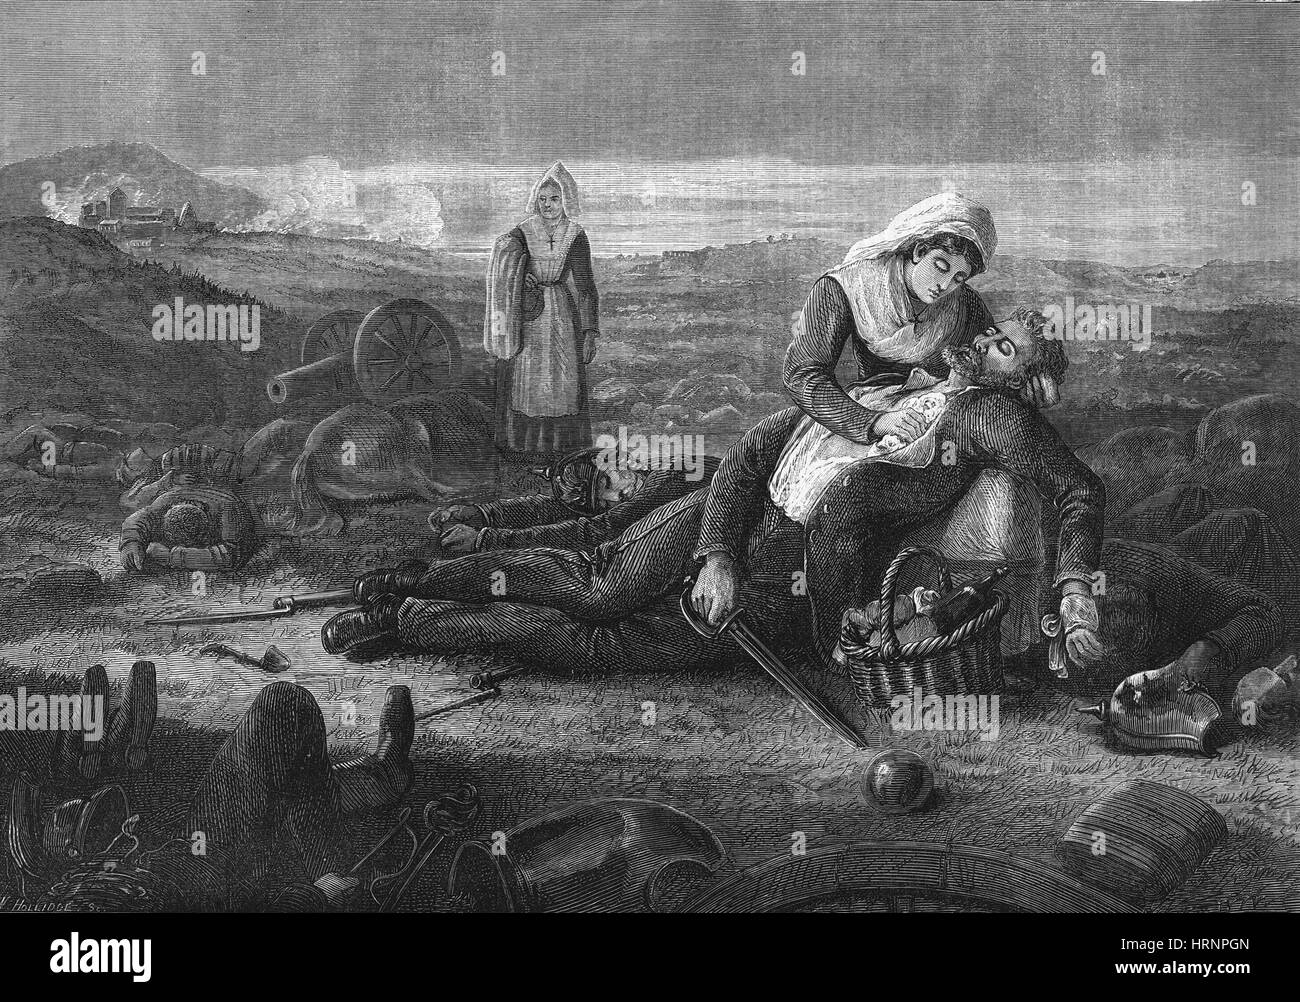 Battlefield Medicine, 19th Century Stock Photo